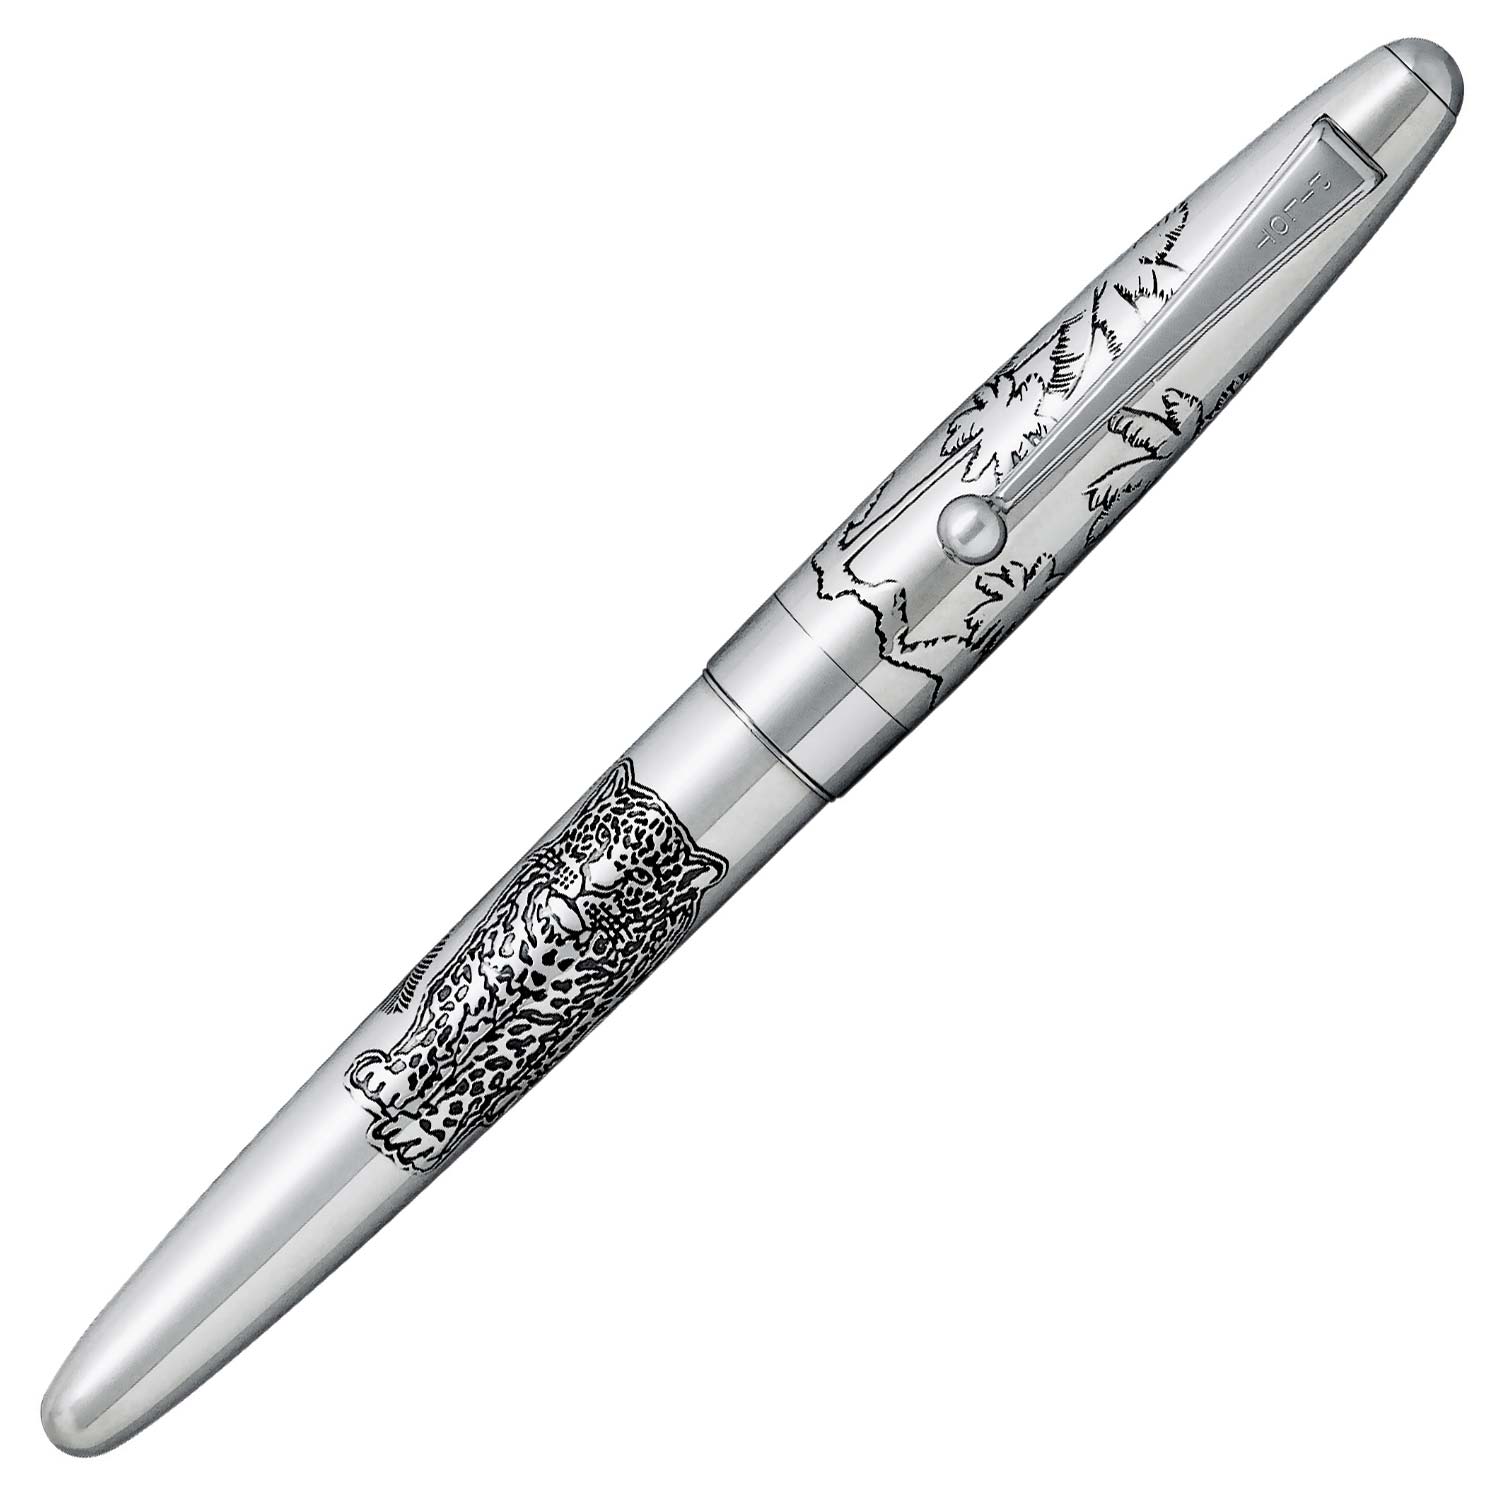 Jaguar Fountain Pen 18k Nib Silver Cap 57%Off Retail Very Rare Best World Price 